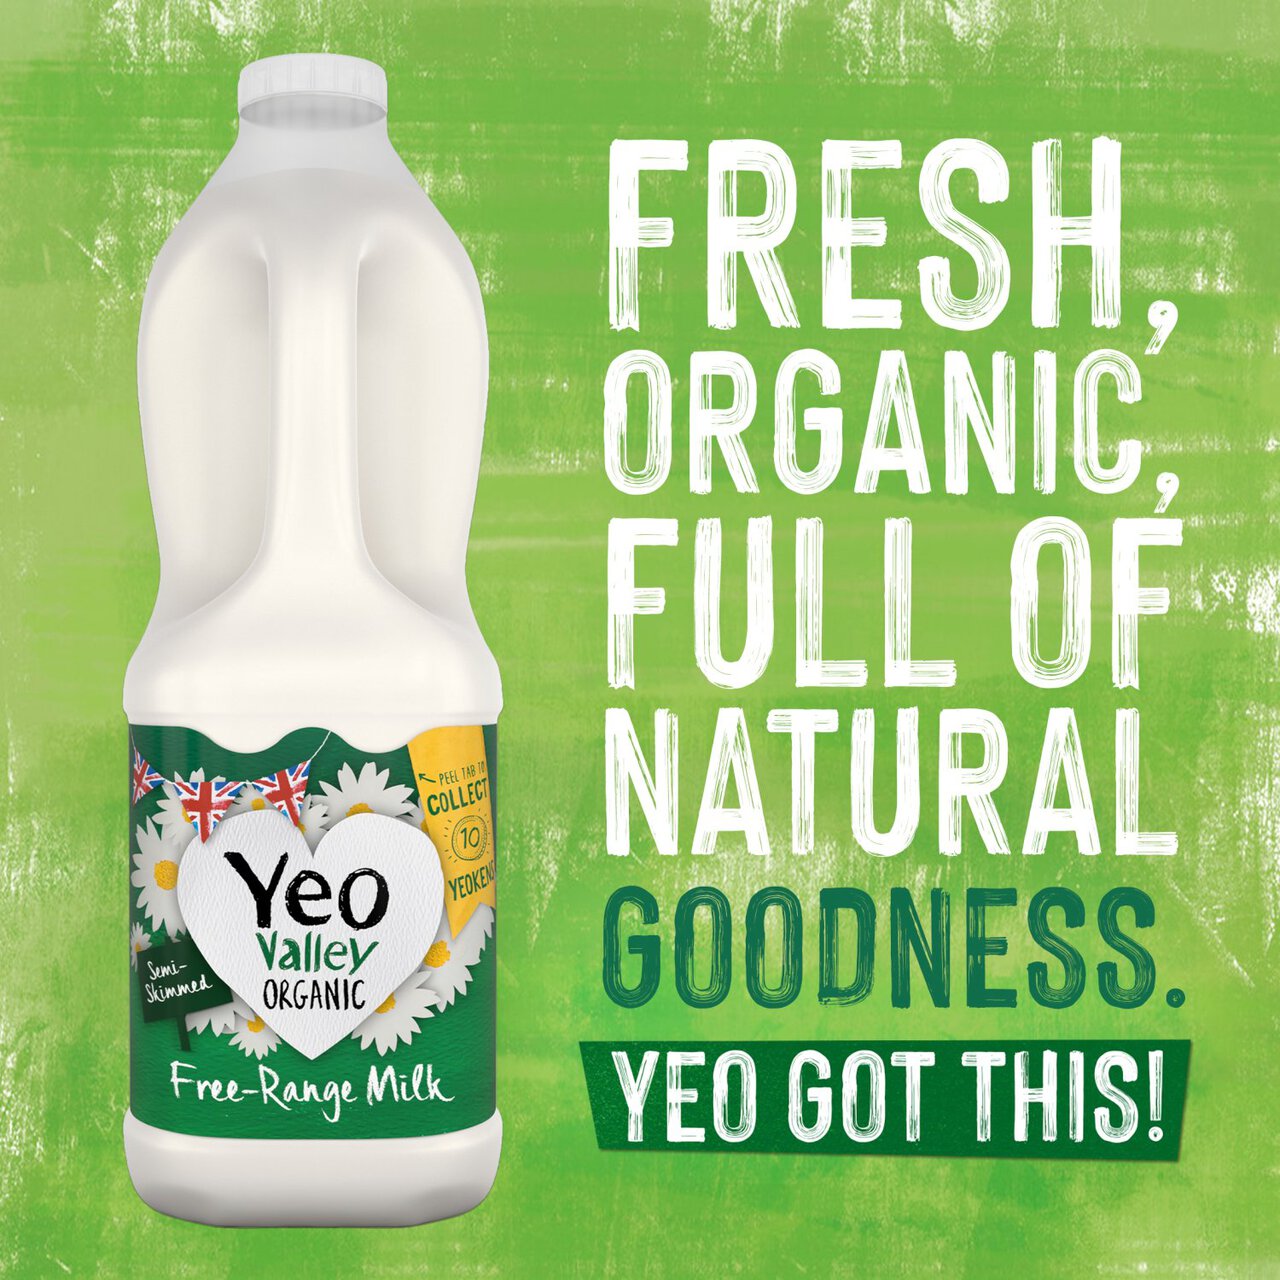 Yeo Valley Organic Fresh Semi Skimmed Milk 2l